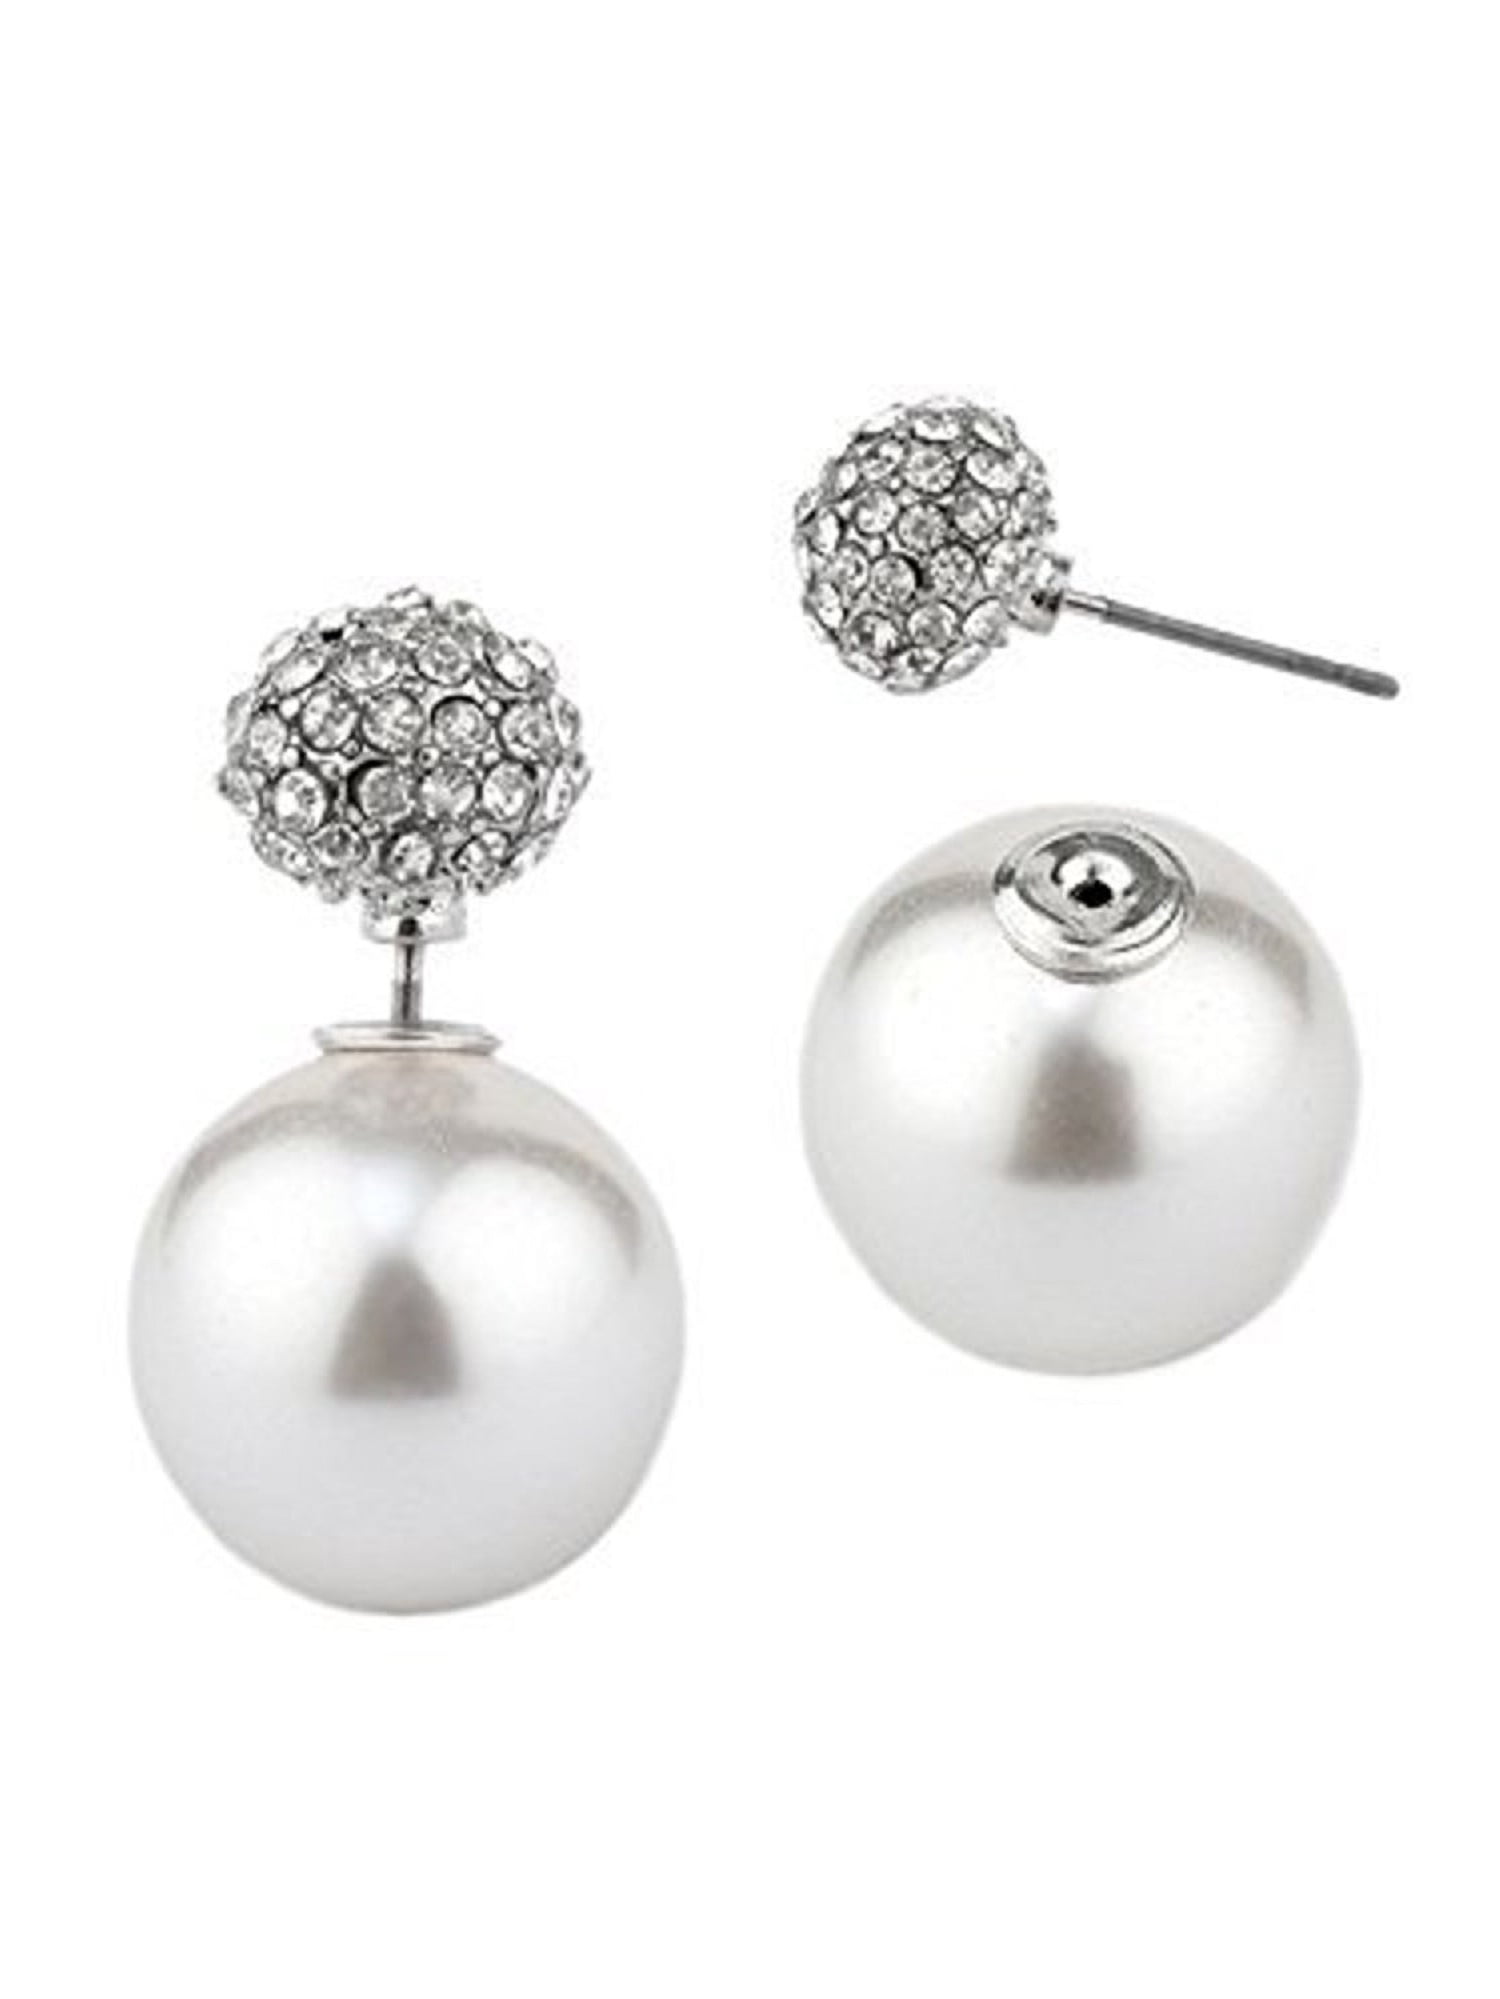 Bling Double Sided Stud Ball Earrings White Pearl